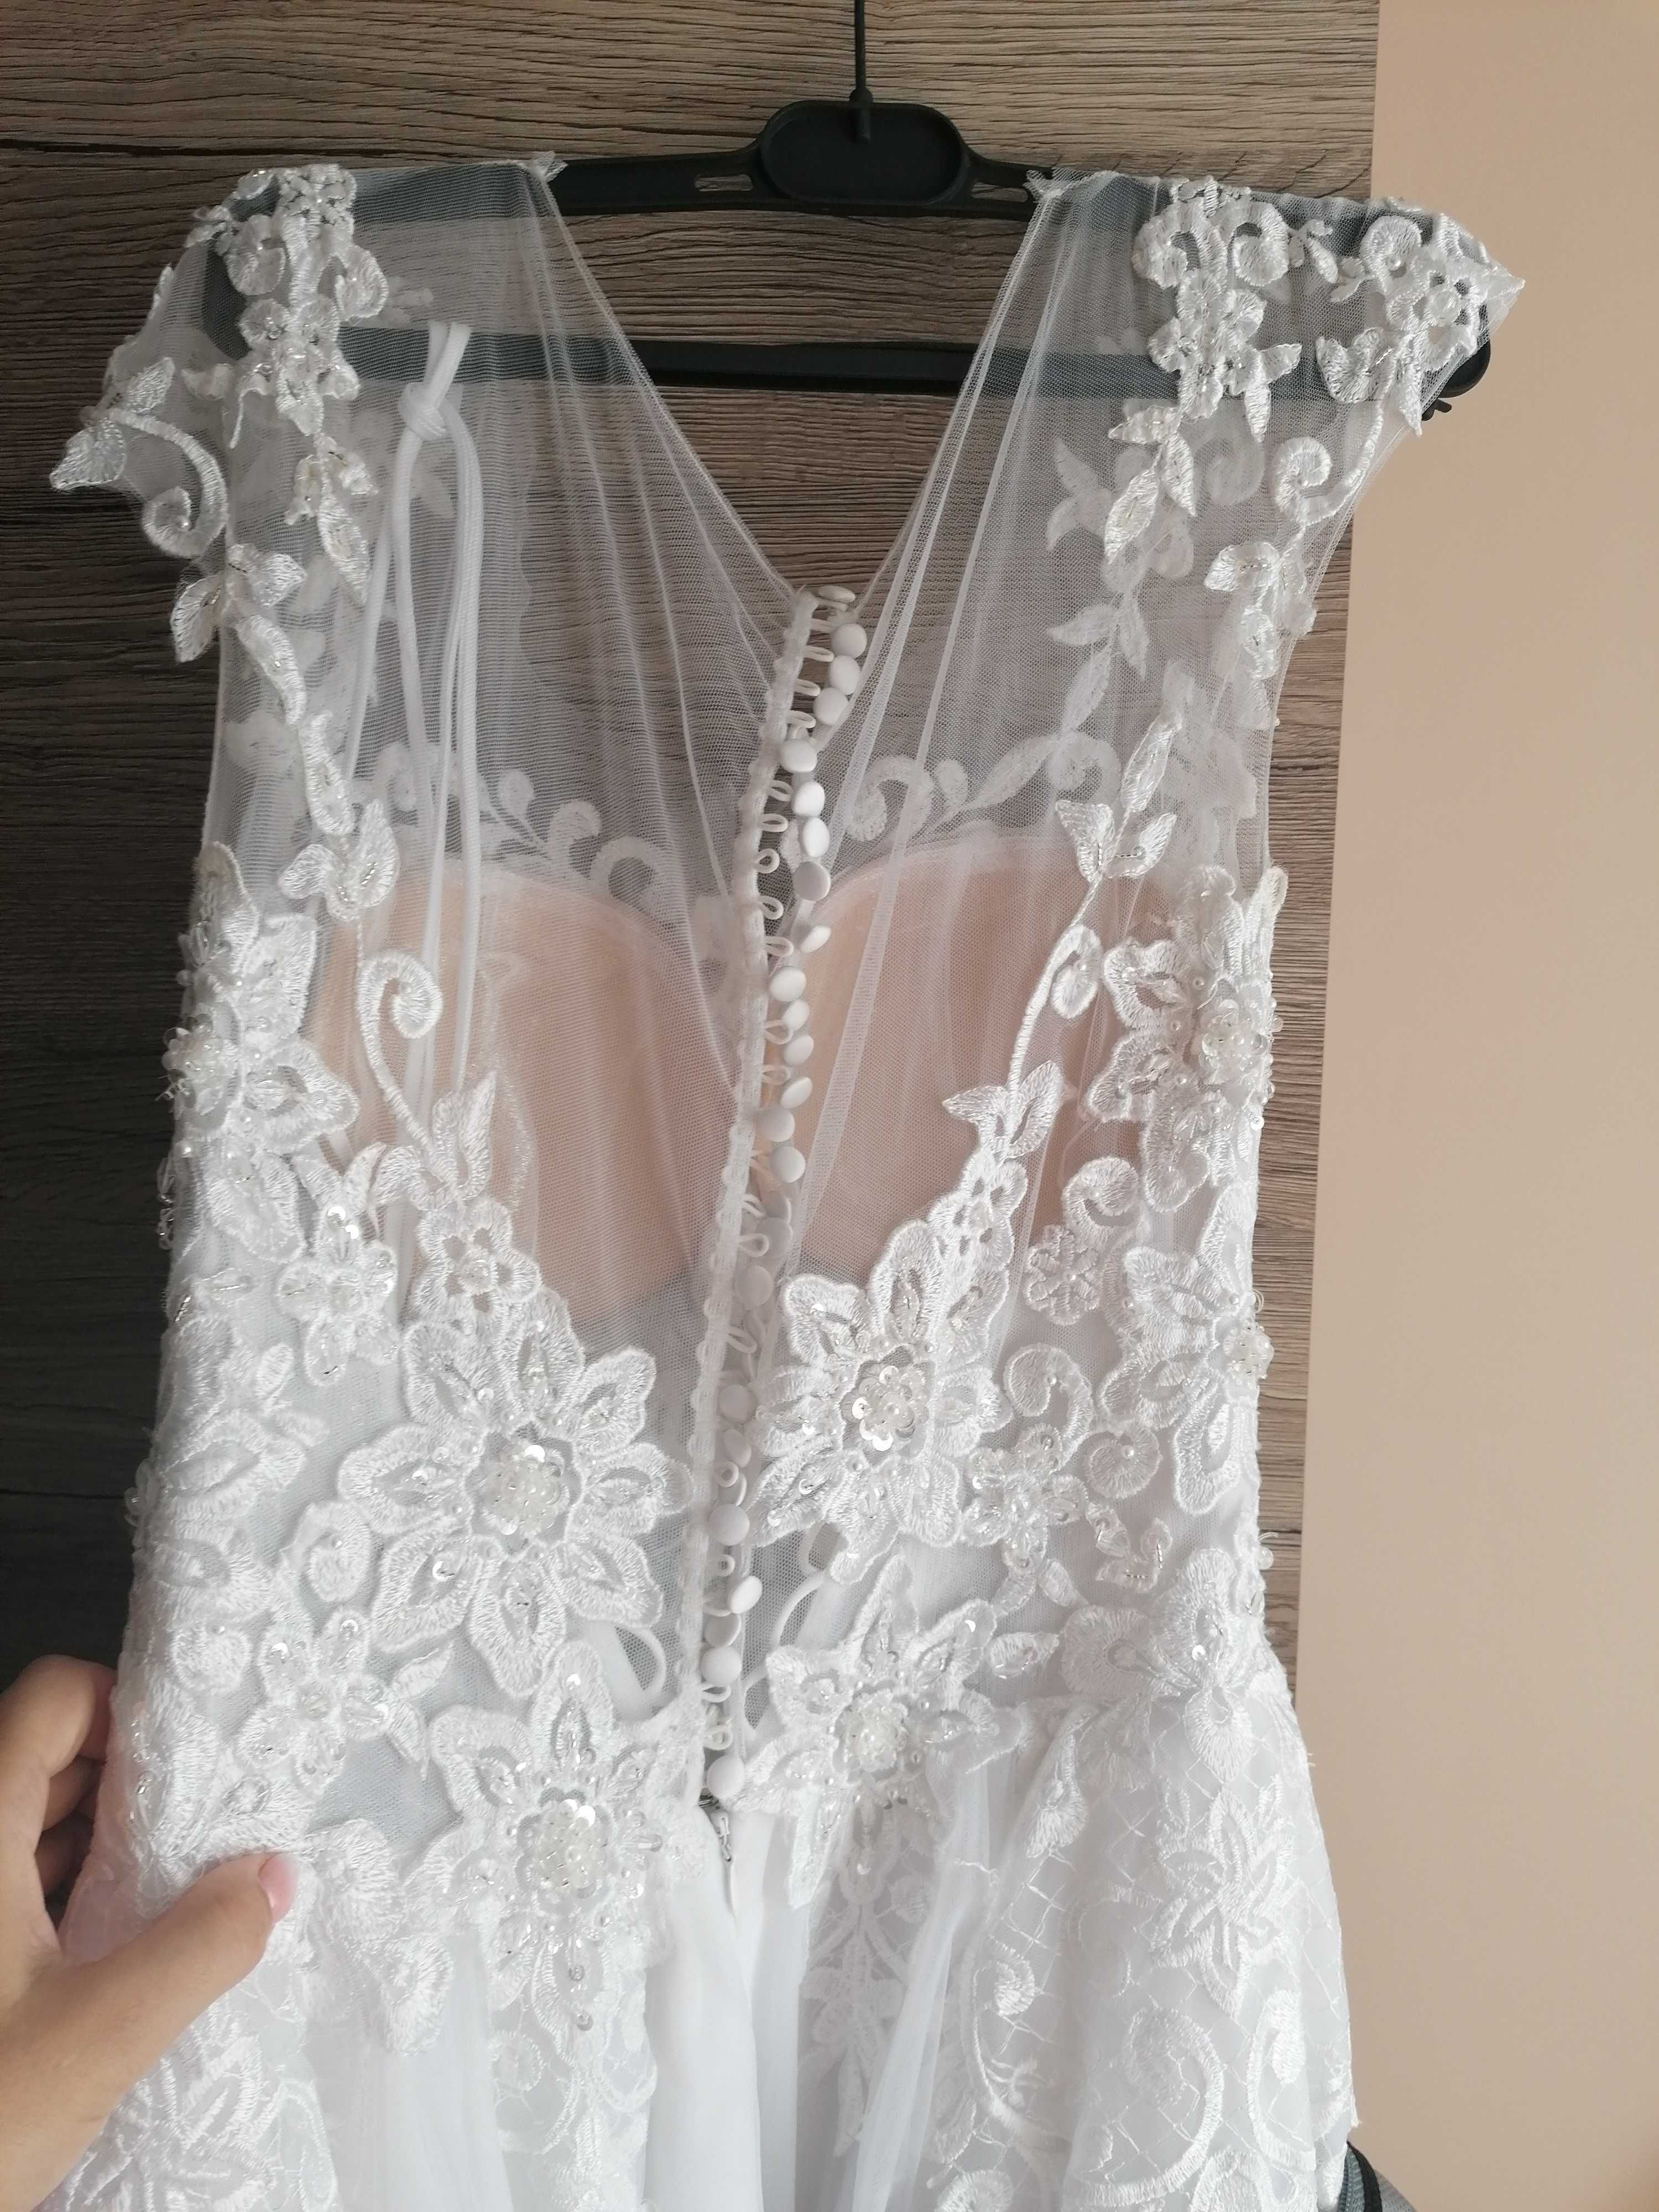 Piękna biała suknia ślubna z koronką 36/38 welon gratis